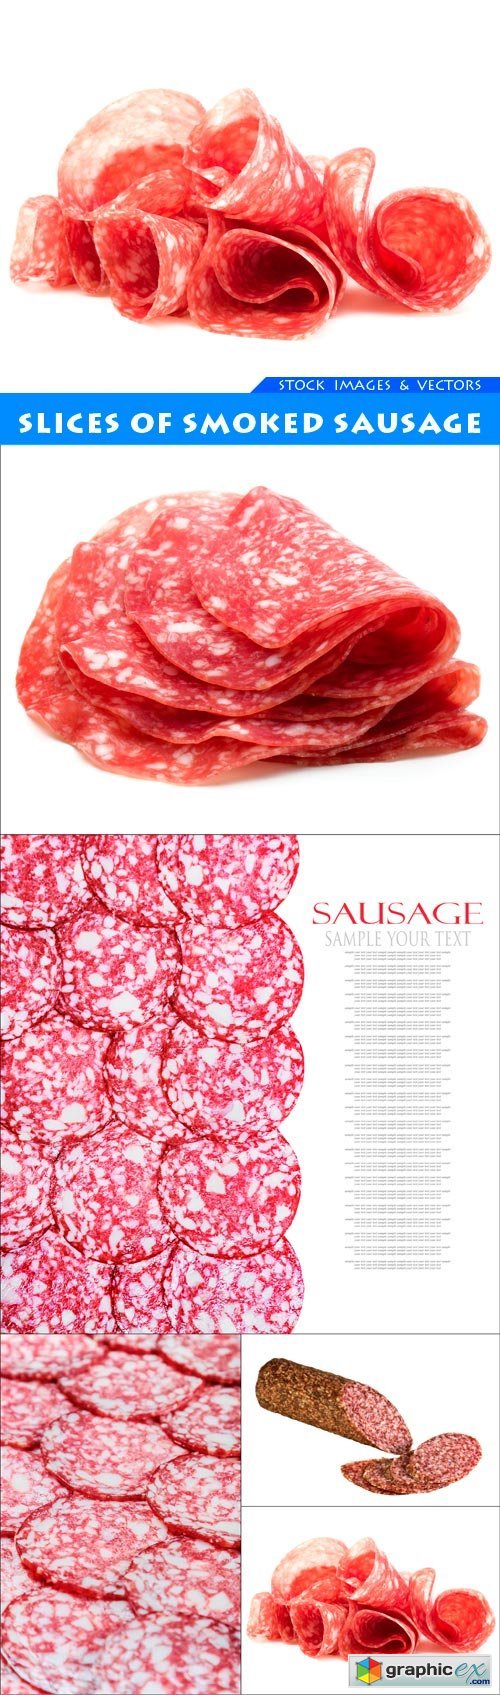 Slices of smoked sausage 5X JPEG